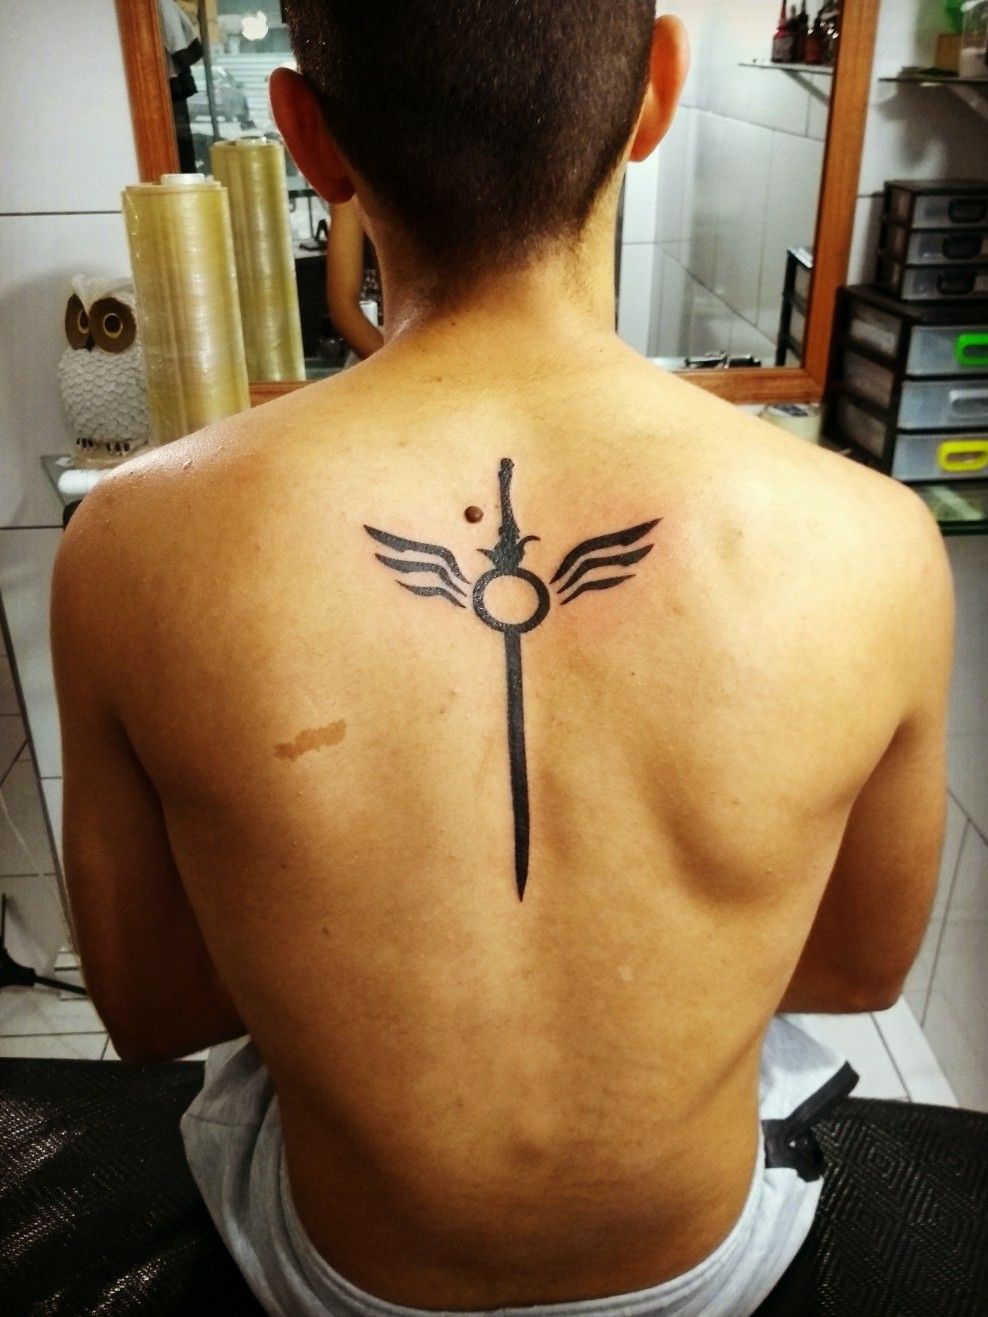 Tattoo uploaded by Eli Clemente • #Nefilim #Dmc #DevilMayCry